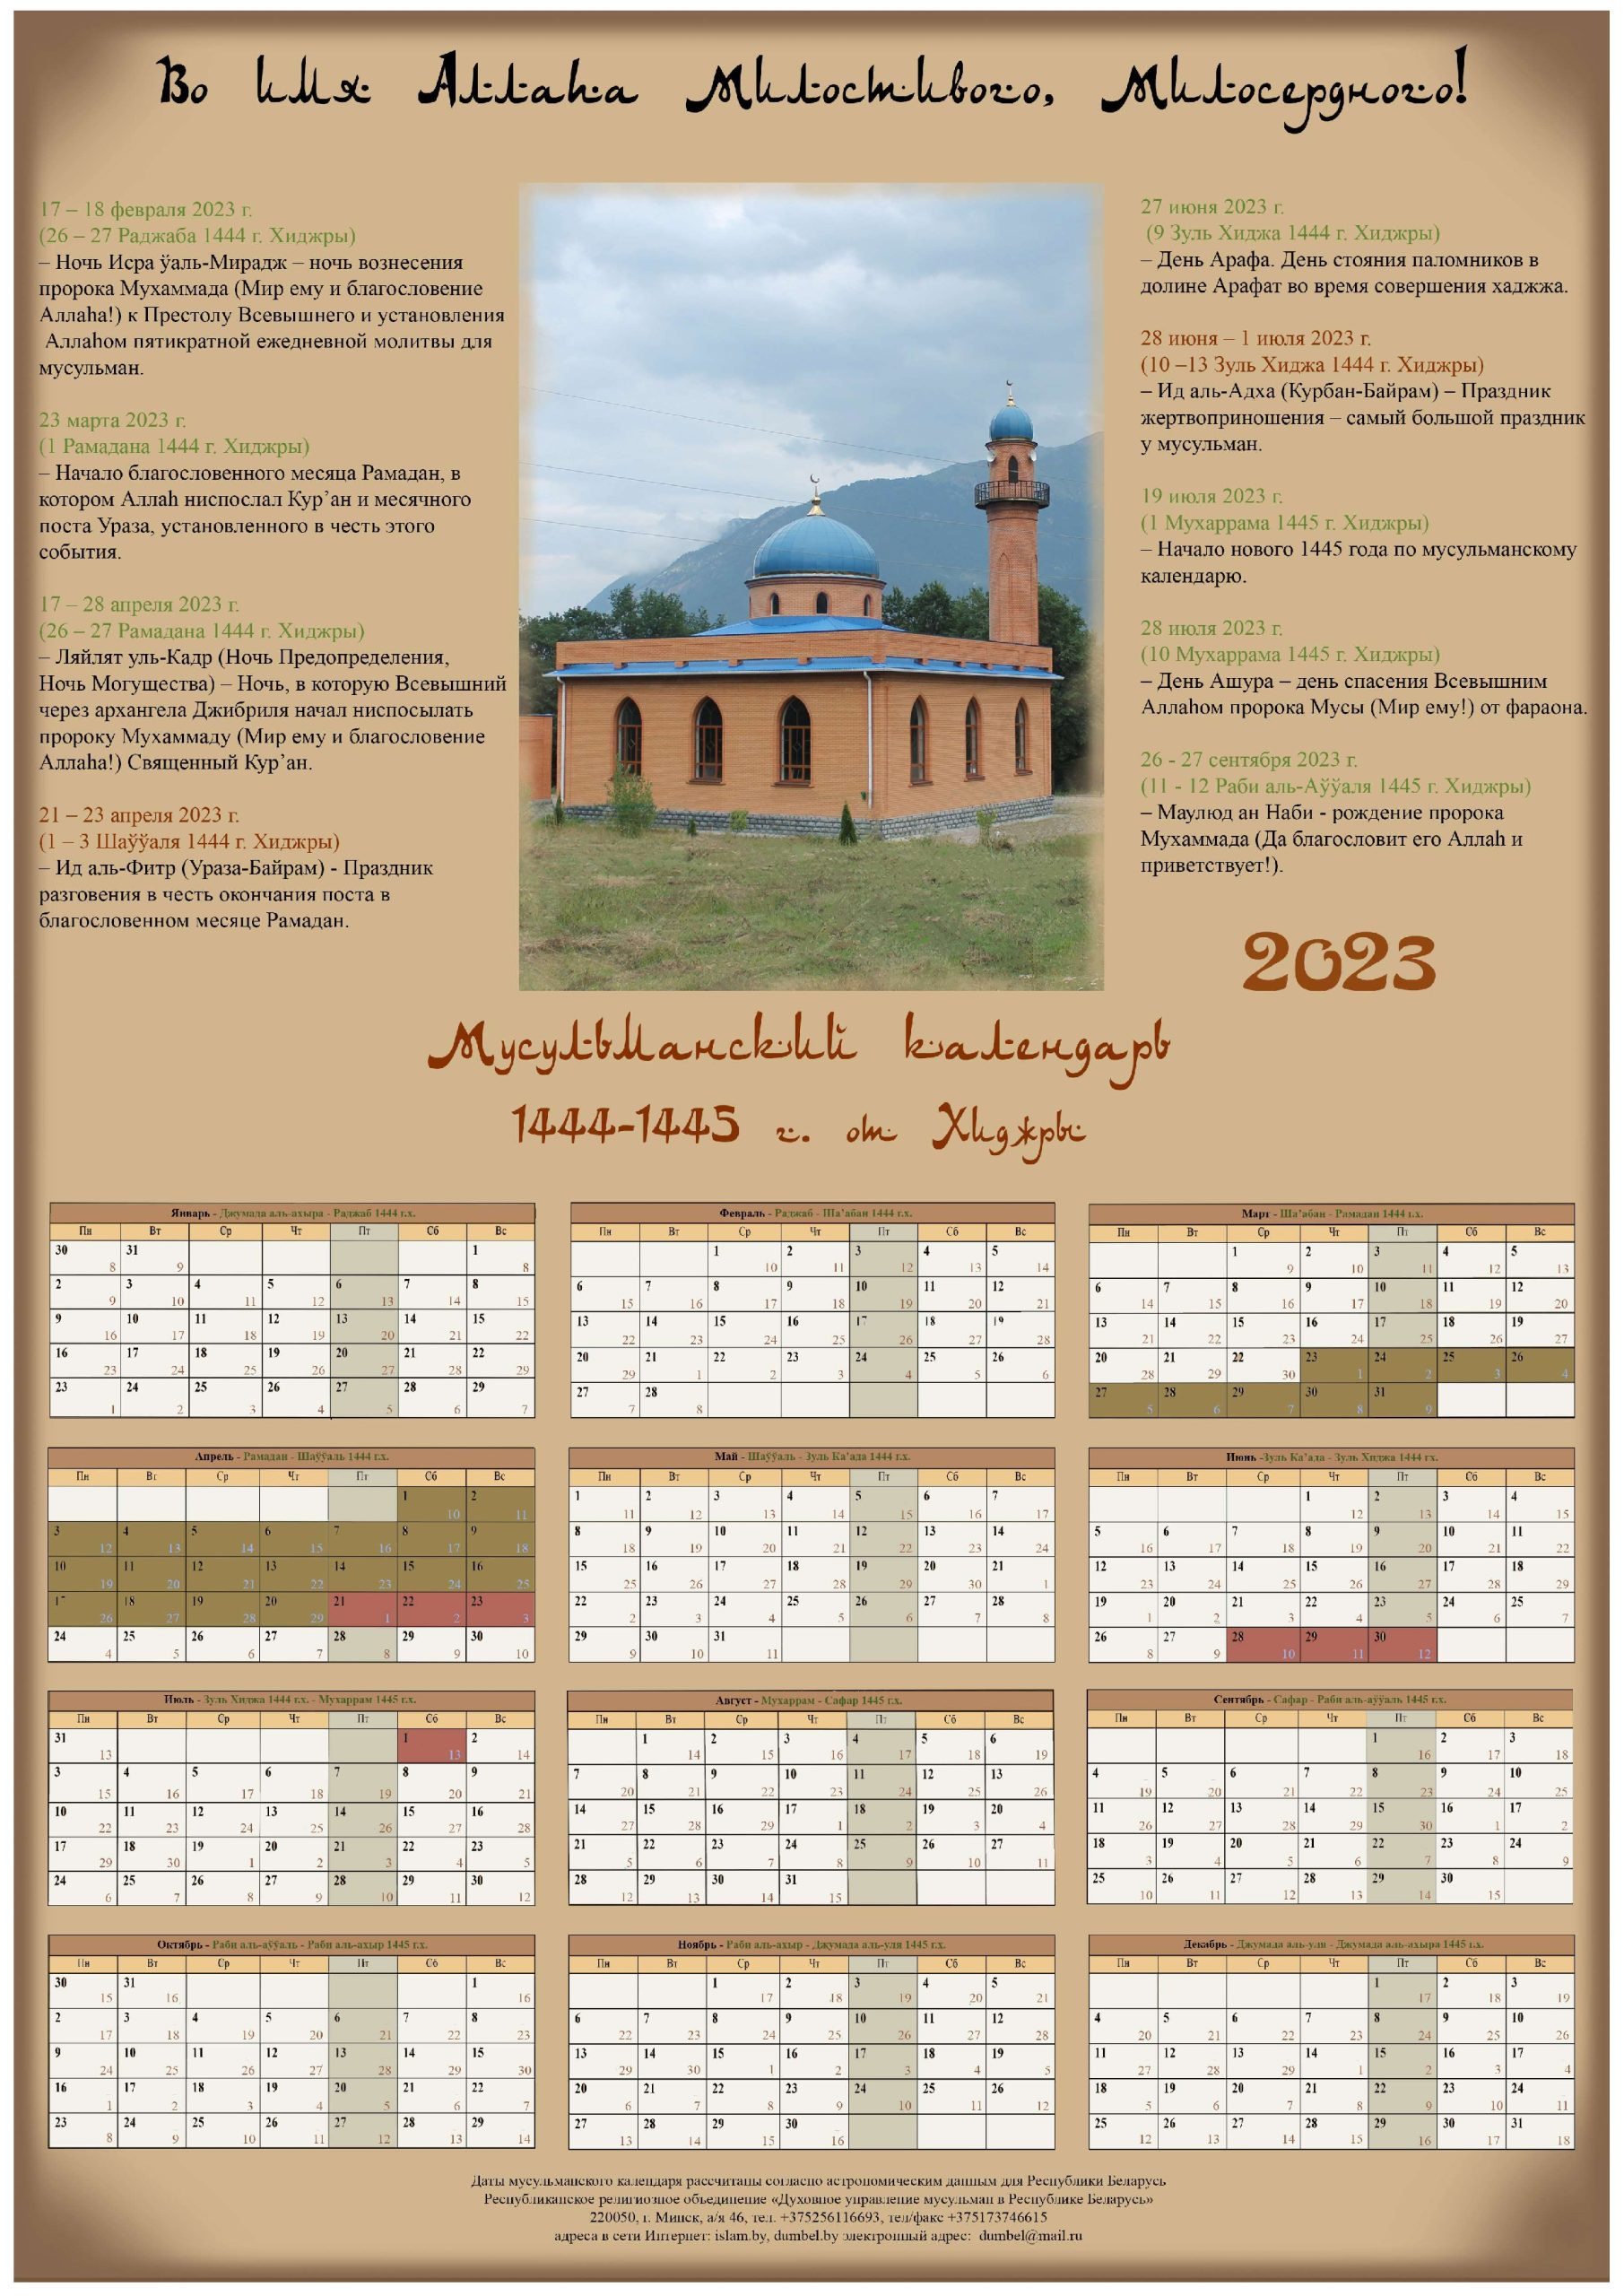 Мусульманский календарь на месяц рамадан. Мусульманский календарь на 2023 год с праздниками. Исламский календарь (Хиджра) на 2023. Исламский календарь на 2023 год. Мусульманский календарь 2023.